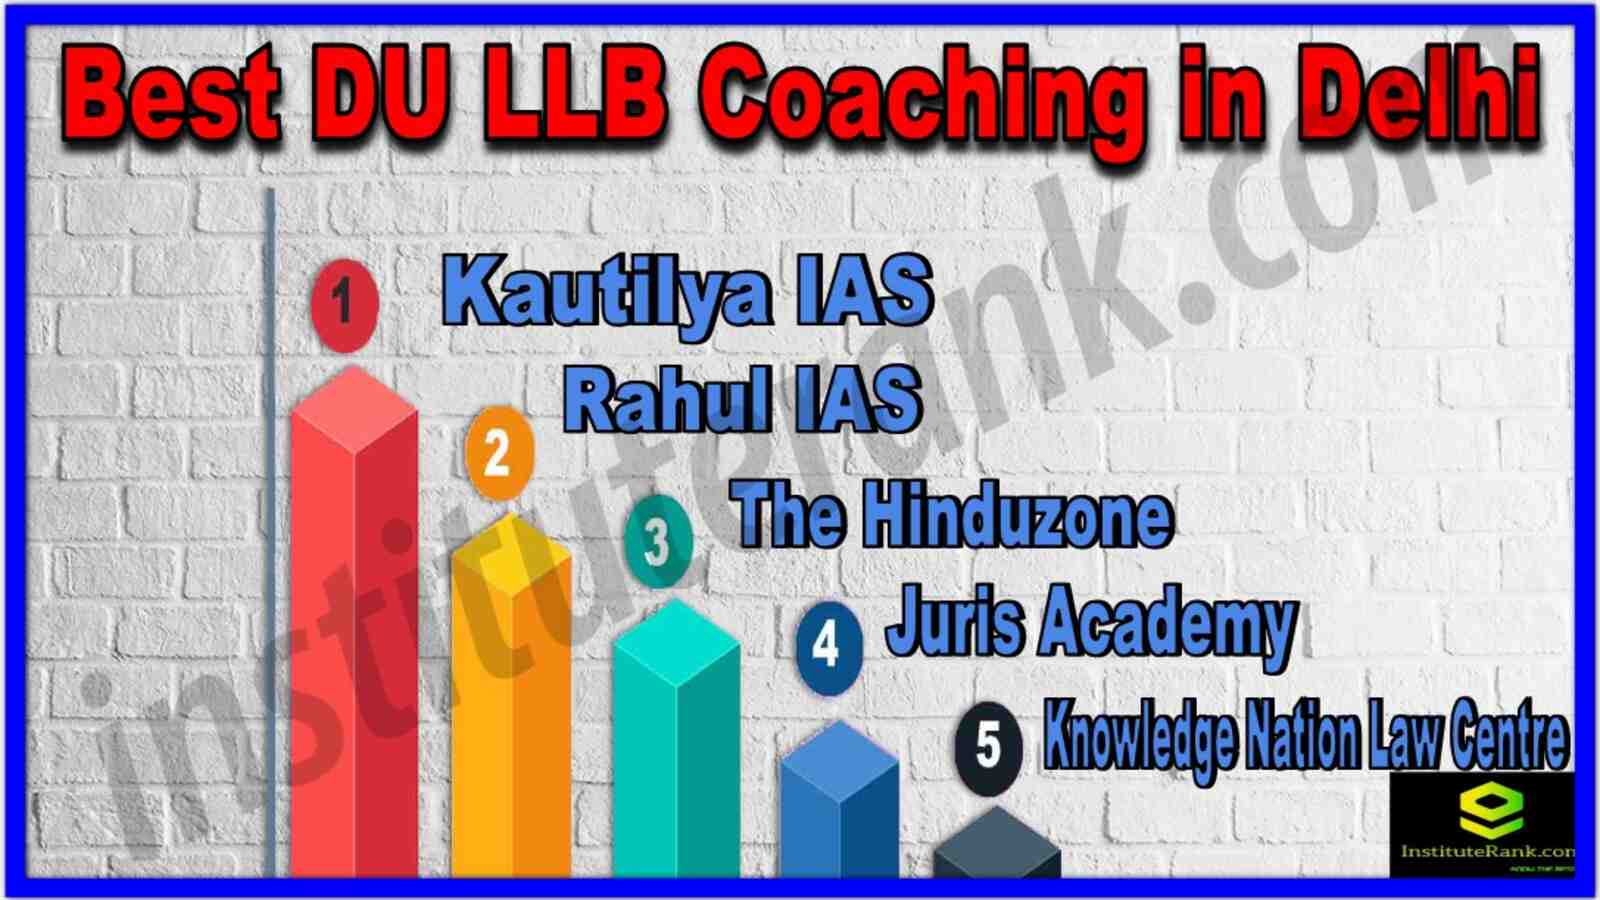 Best DU LLB Coaching in Delhi